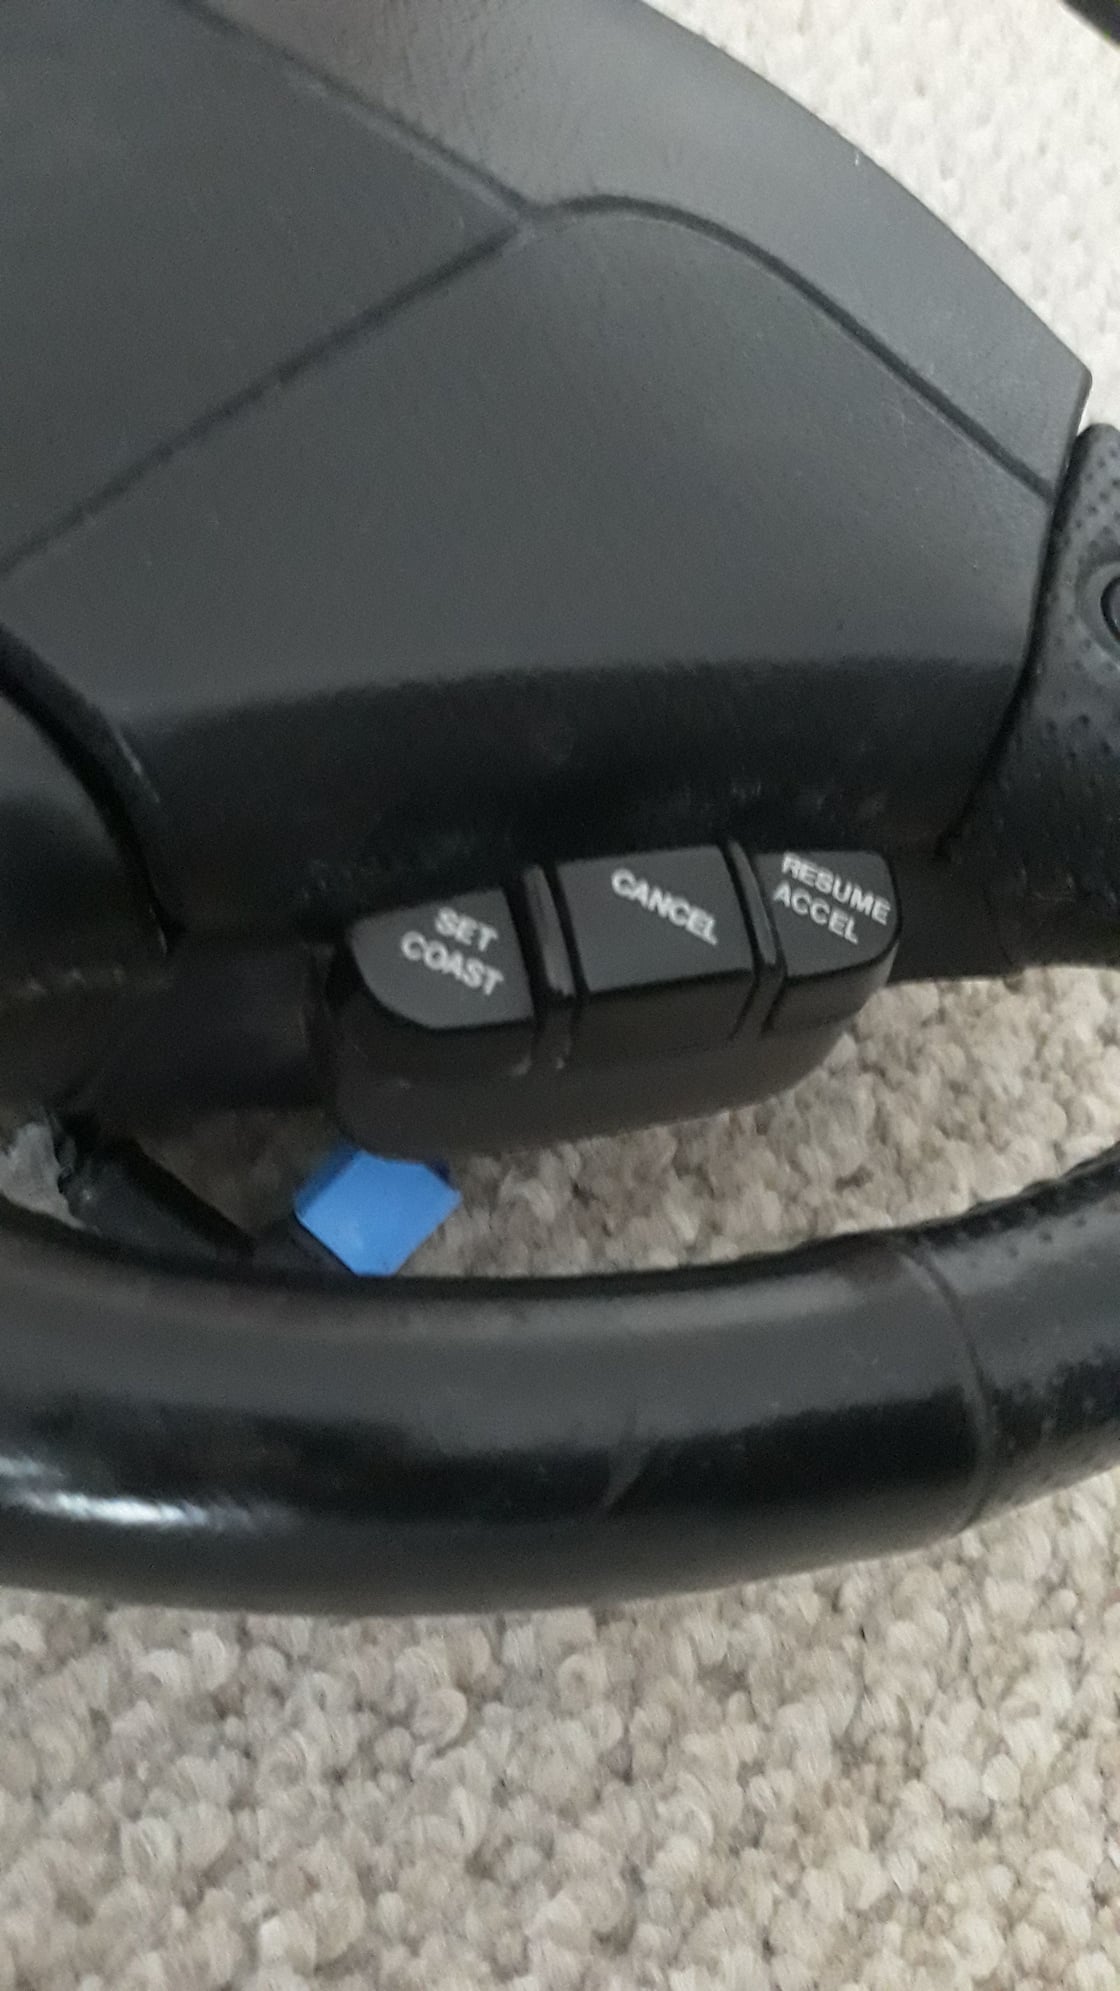 Steering/Suspension - OEM MAZDA RX7 Steering wheel with airbag - Used - 1993 to 1995 Mazda RX-7 - Orlando, FL 32824, United States